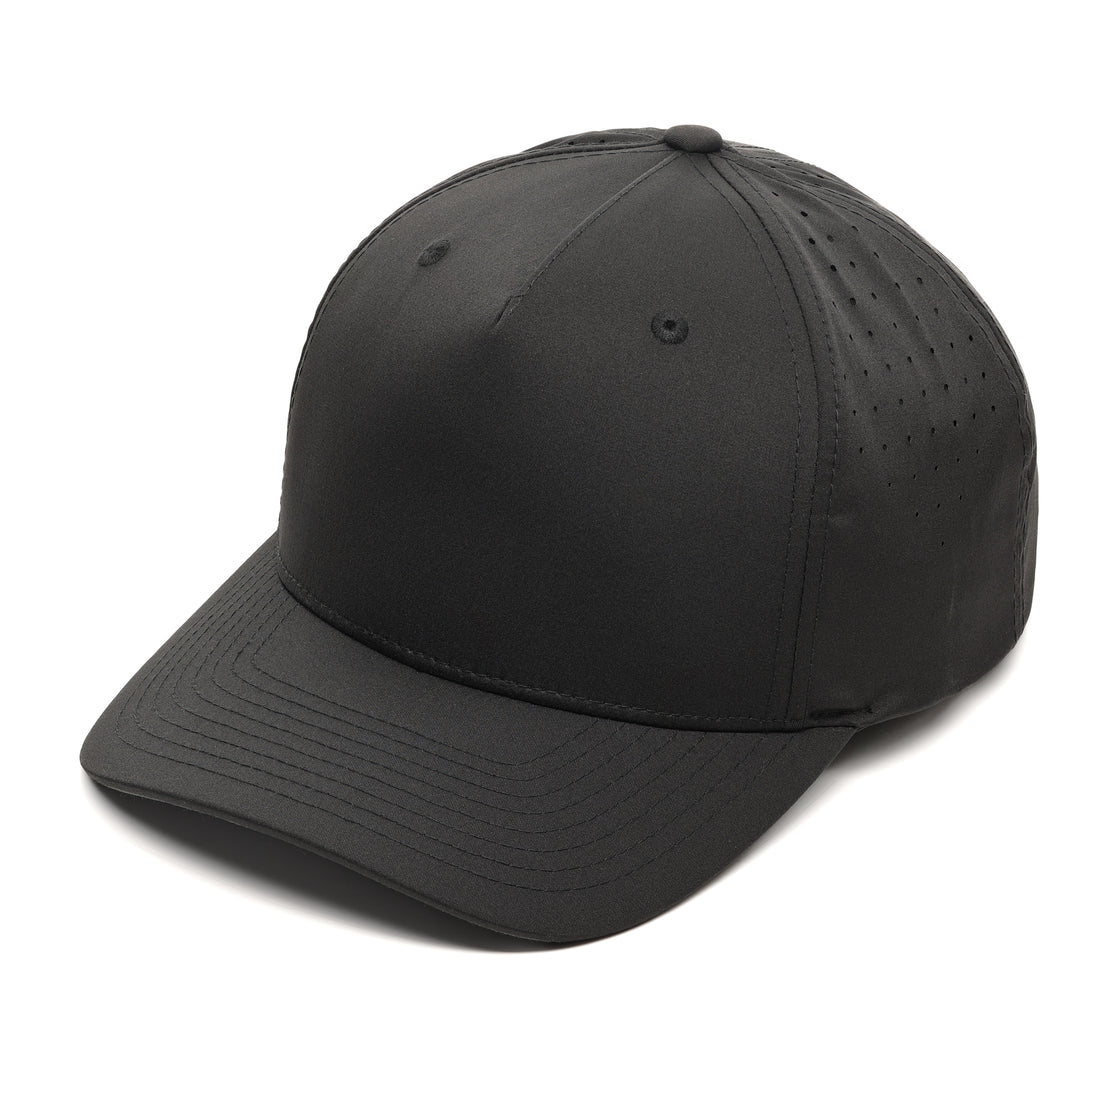 GRAYHAWK – SMALL BATCH HATS